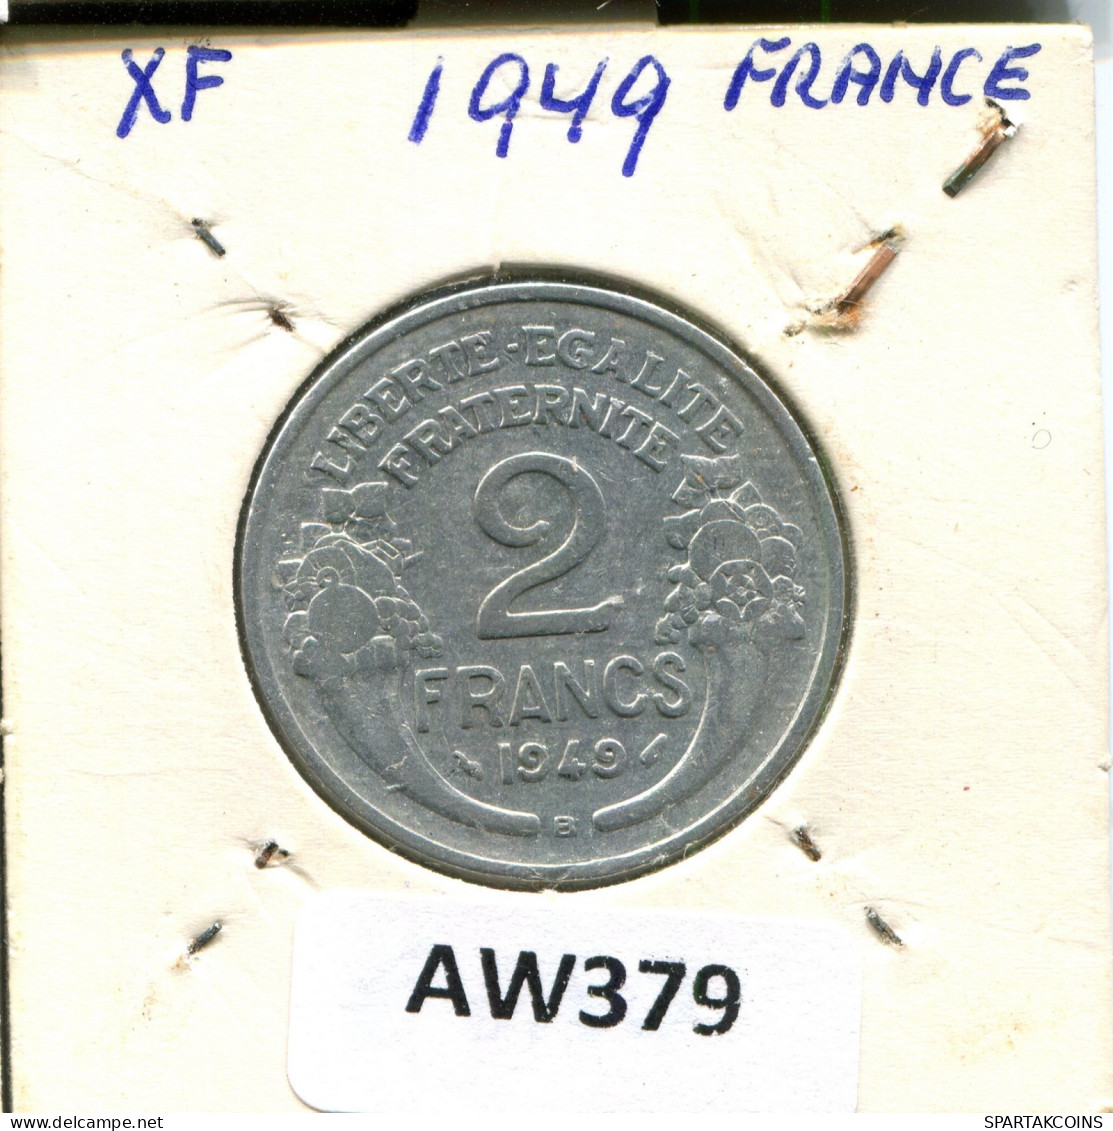 2 FRANCS 1949 FRANCE Coin #AW379.U.A - 2 Francs